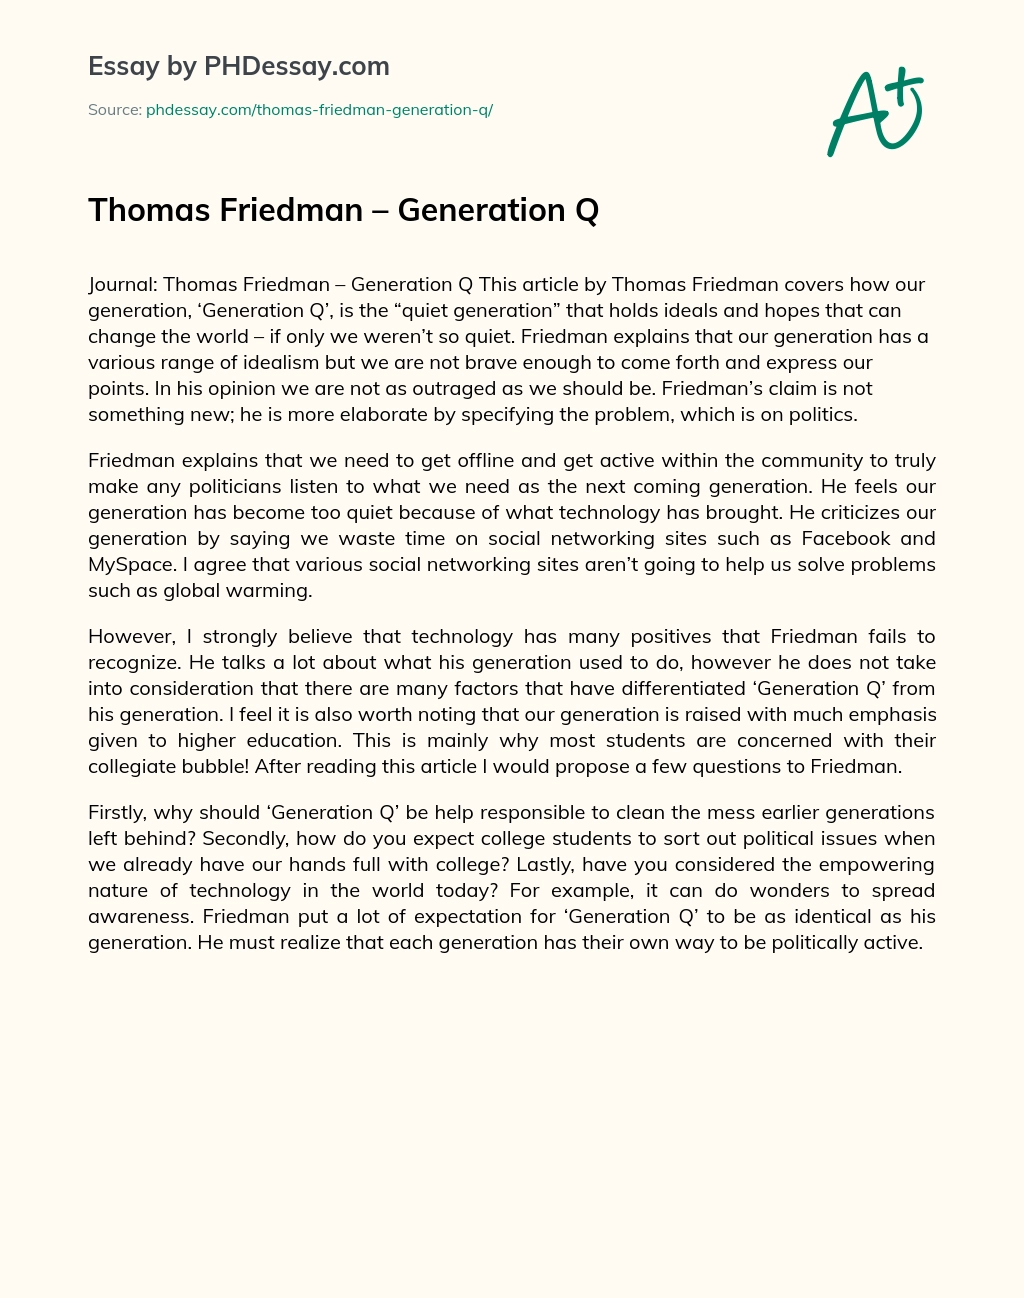 Thomas Friedman – Generation Q essay